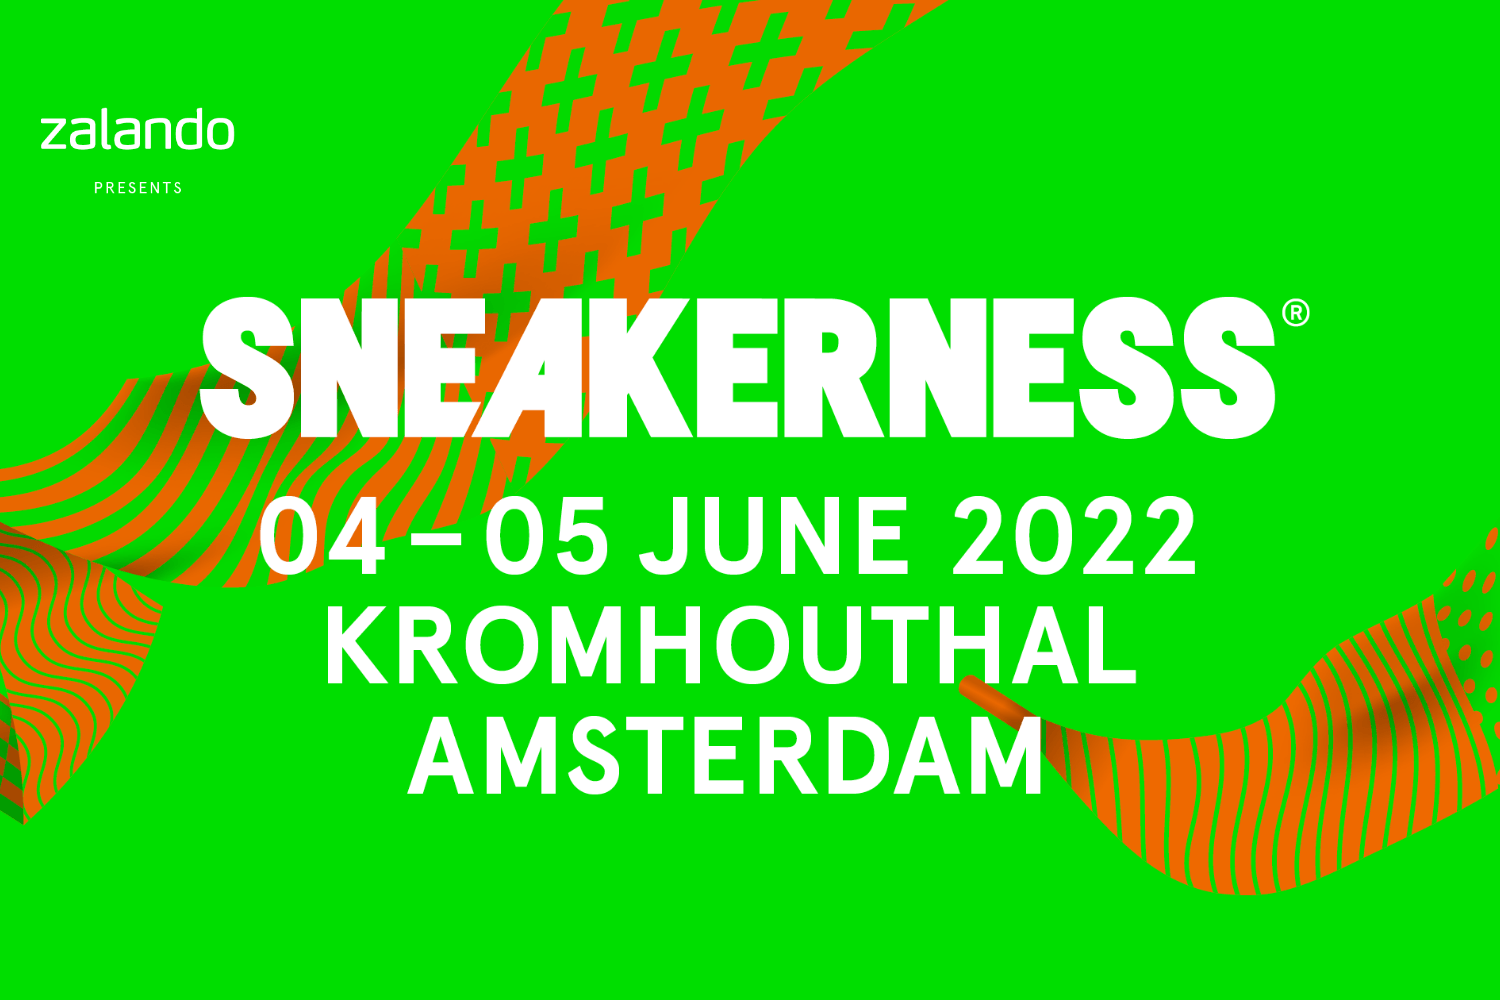 Zalando is main sponsor of Sneakerness Amsterdam 2022